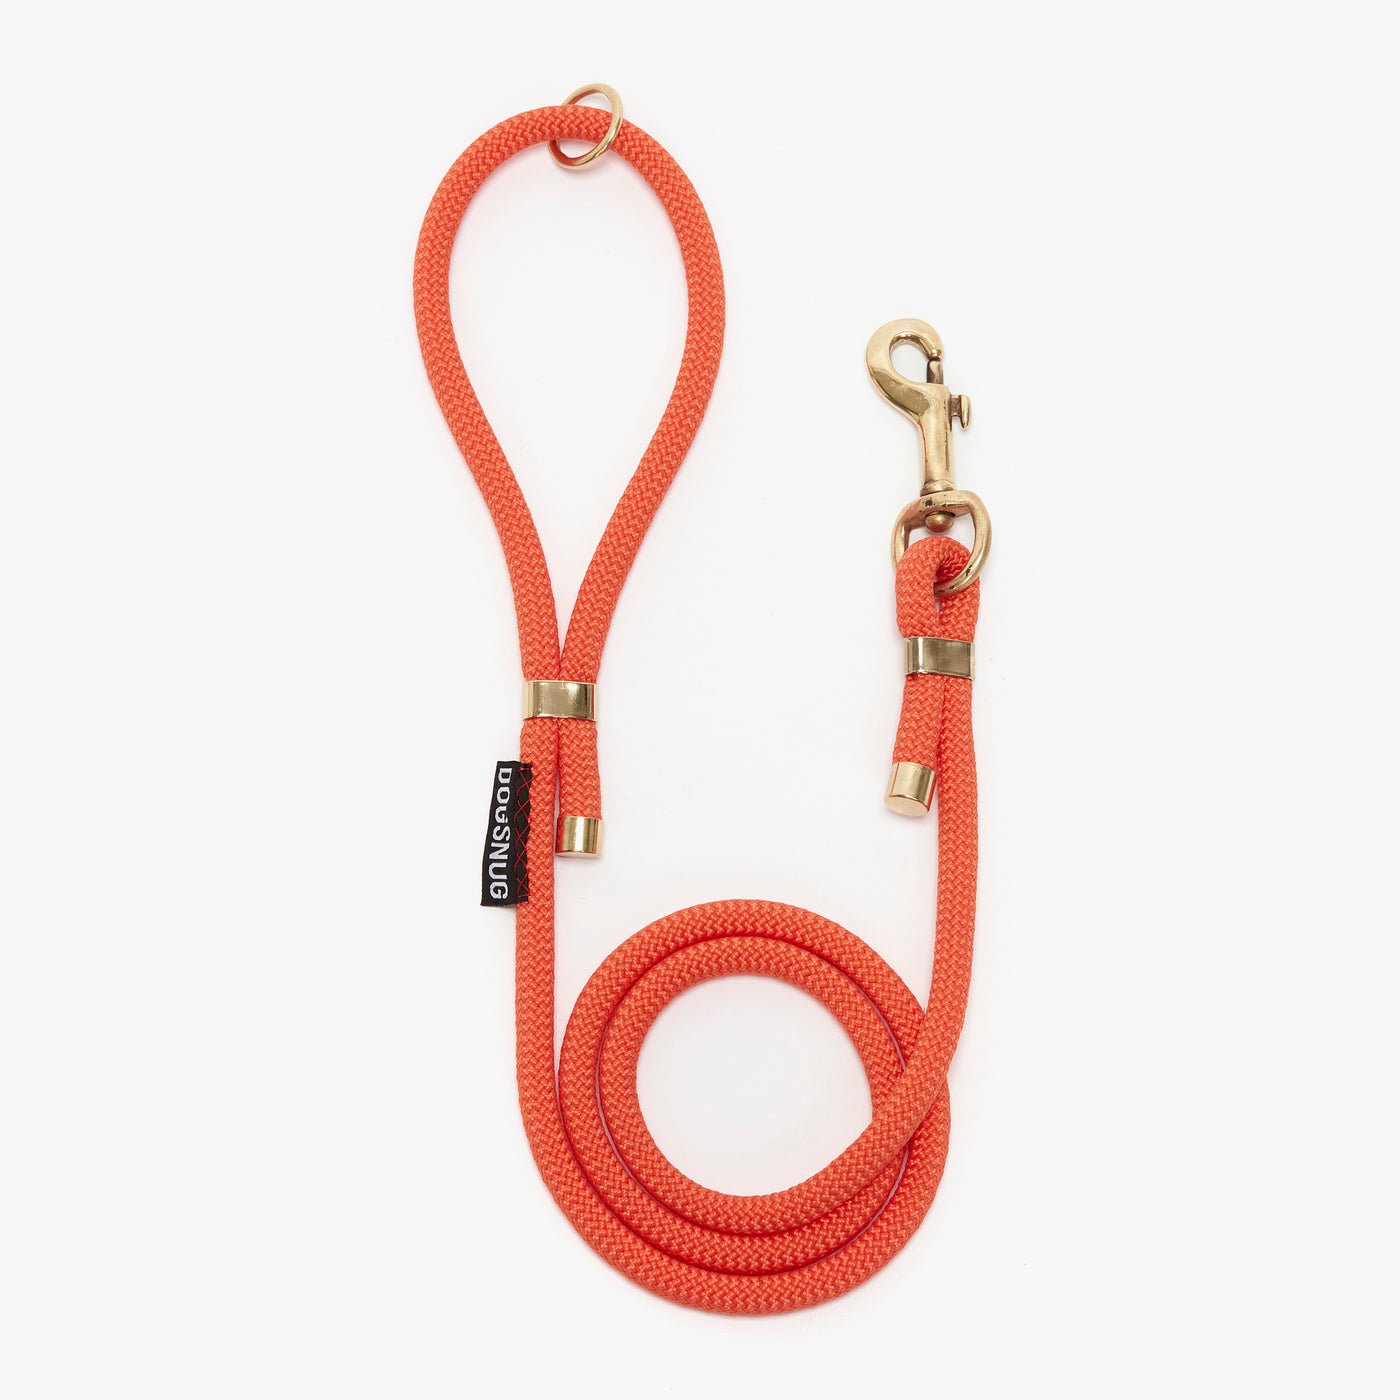 Rope dog lead in orange, standard length